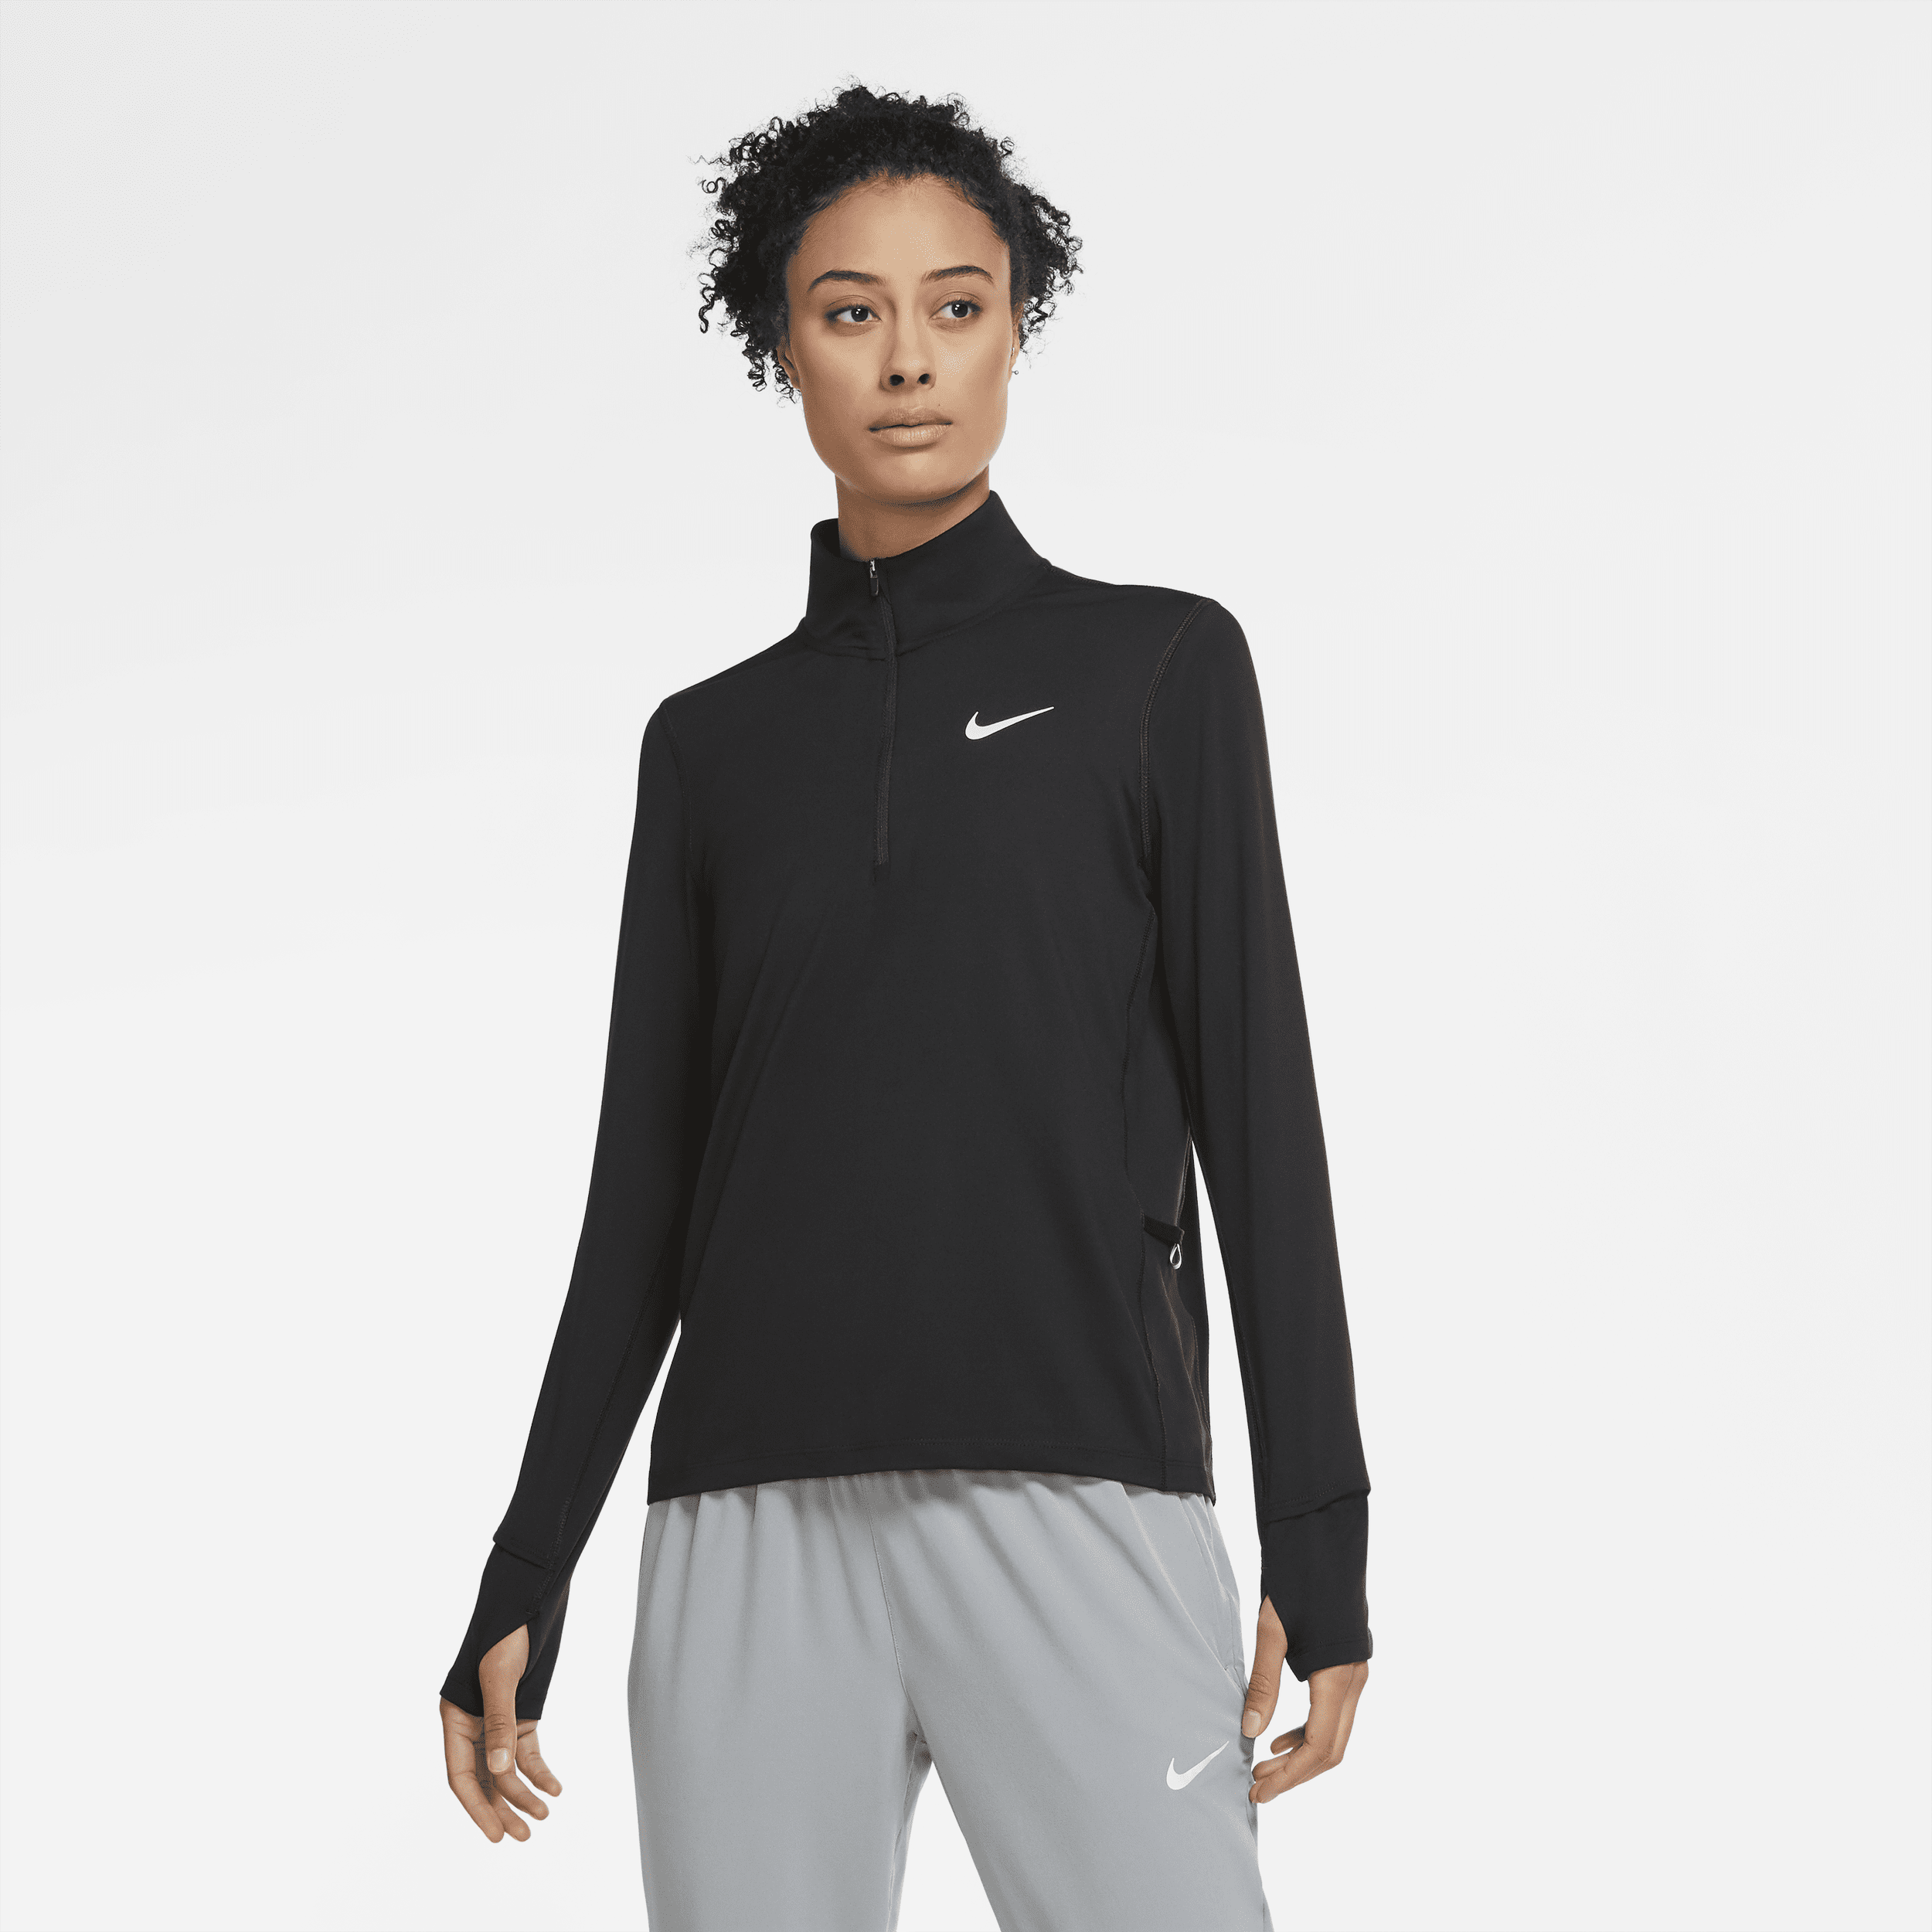 Nike Hardlooptop met halflange ritssluiting voor dames - Zwart